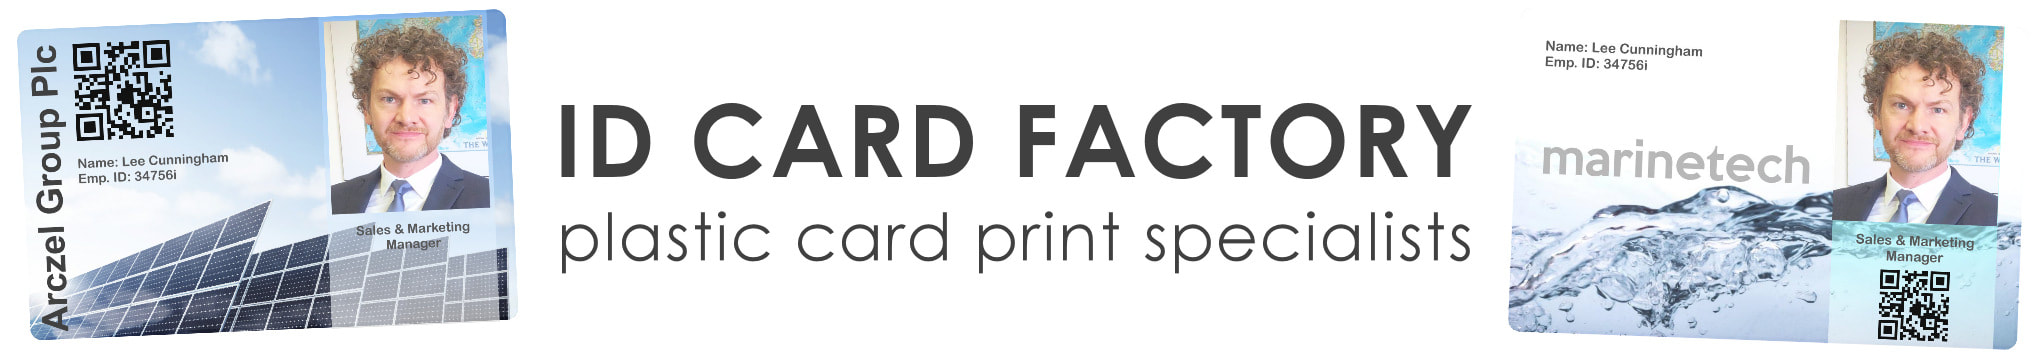 St. Alban's ID card printing | staff photo ID cards | company employee ID card print service | Local Identity Card Printing | Custom Design 